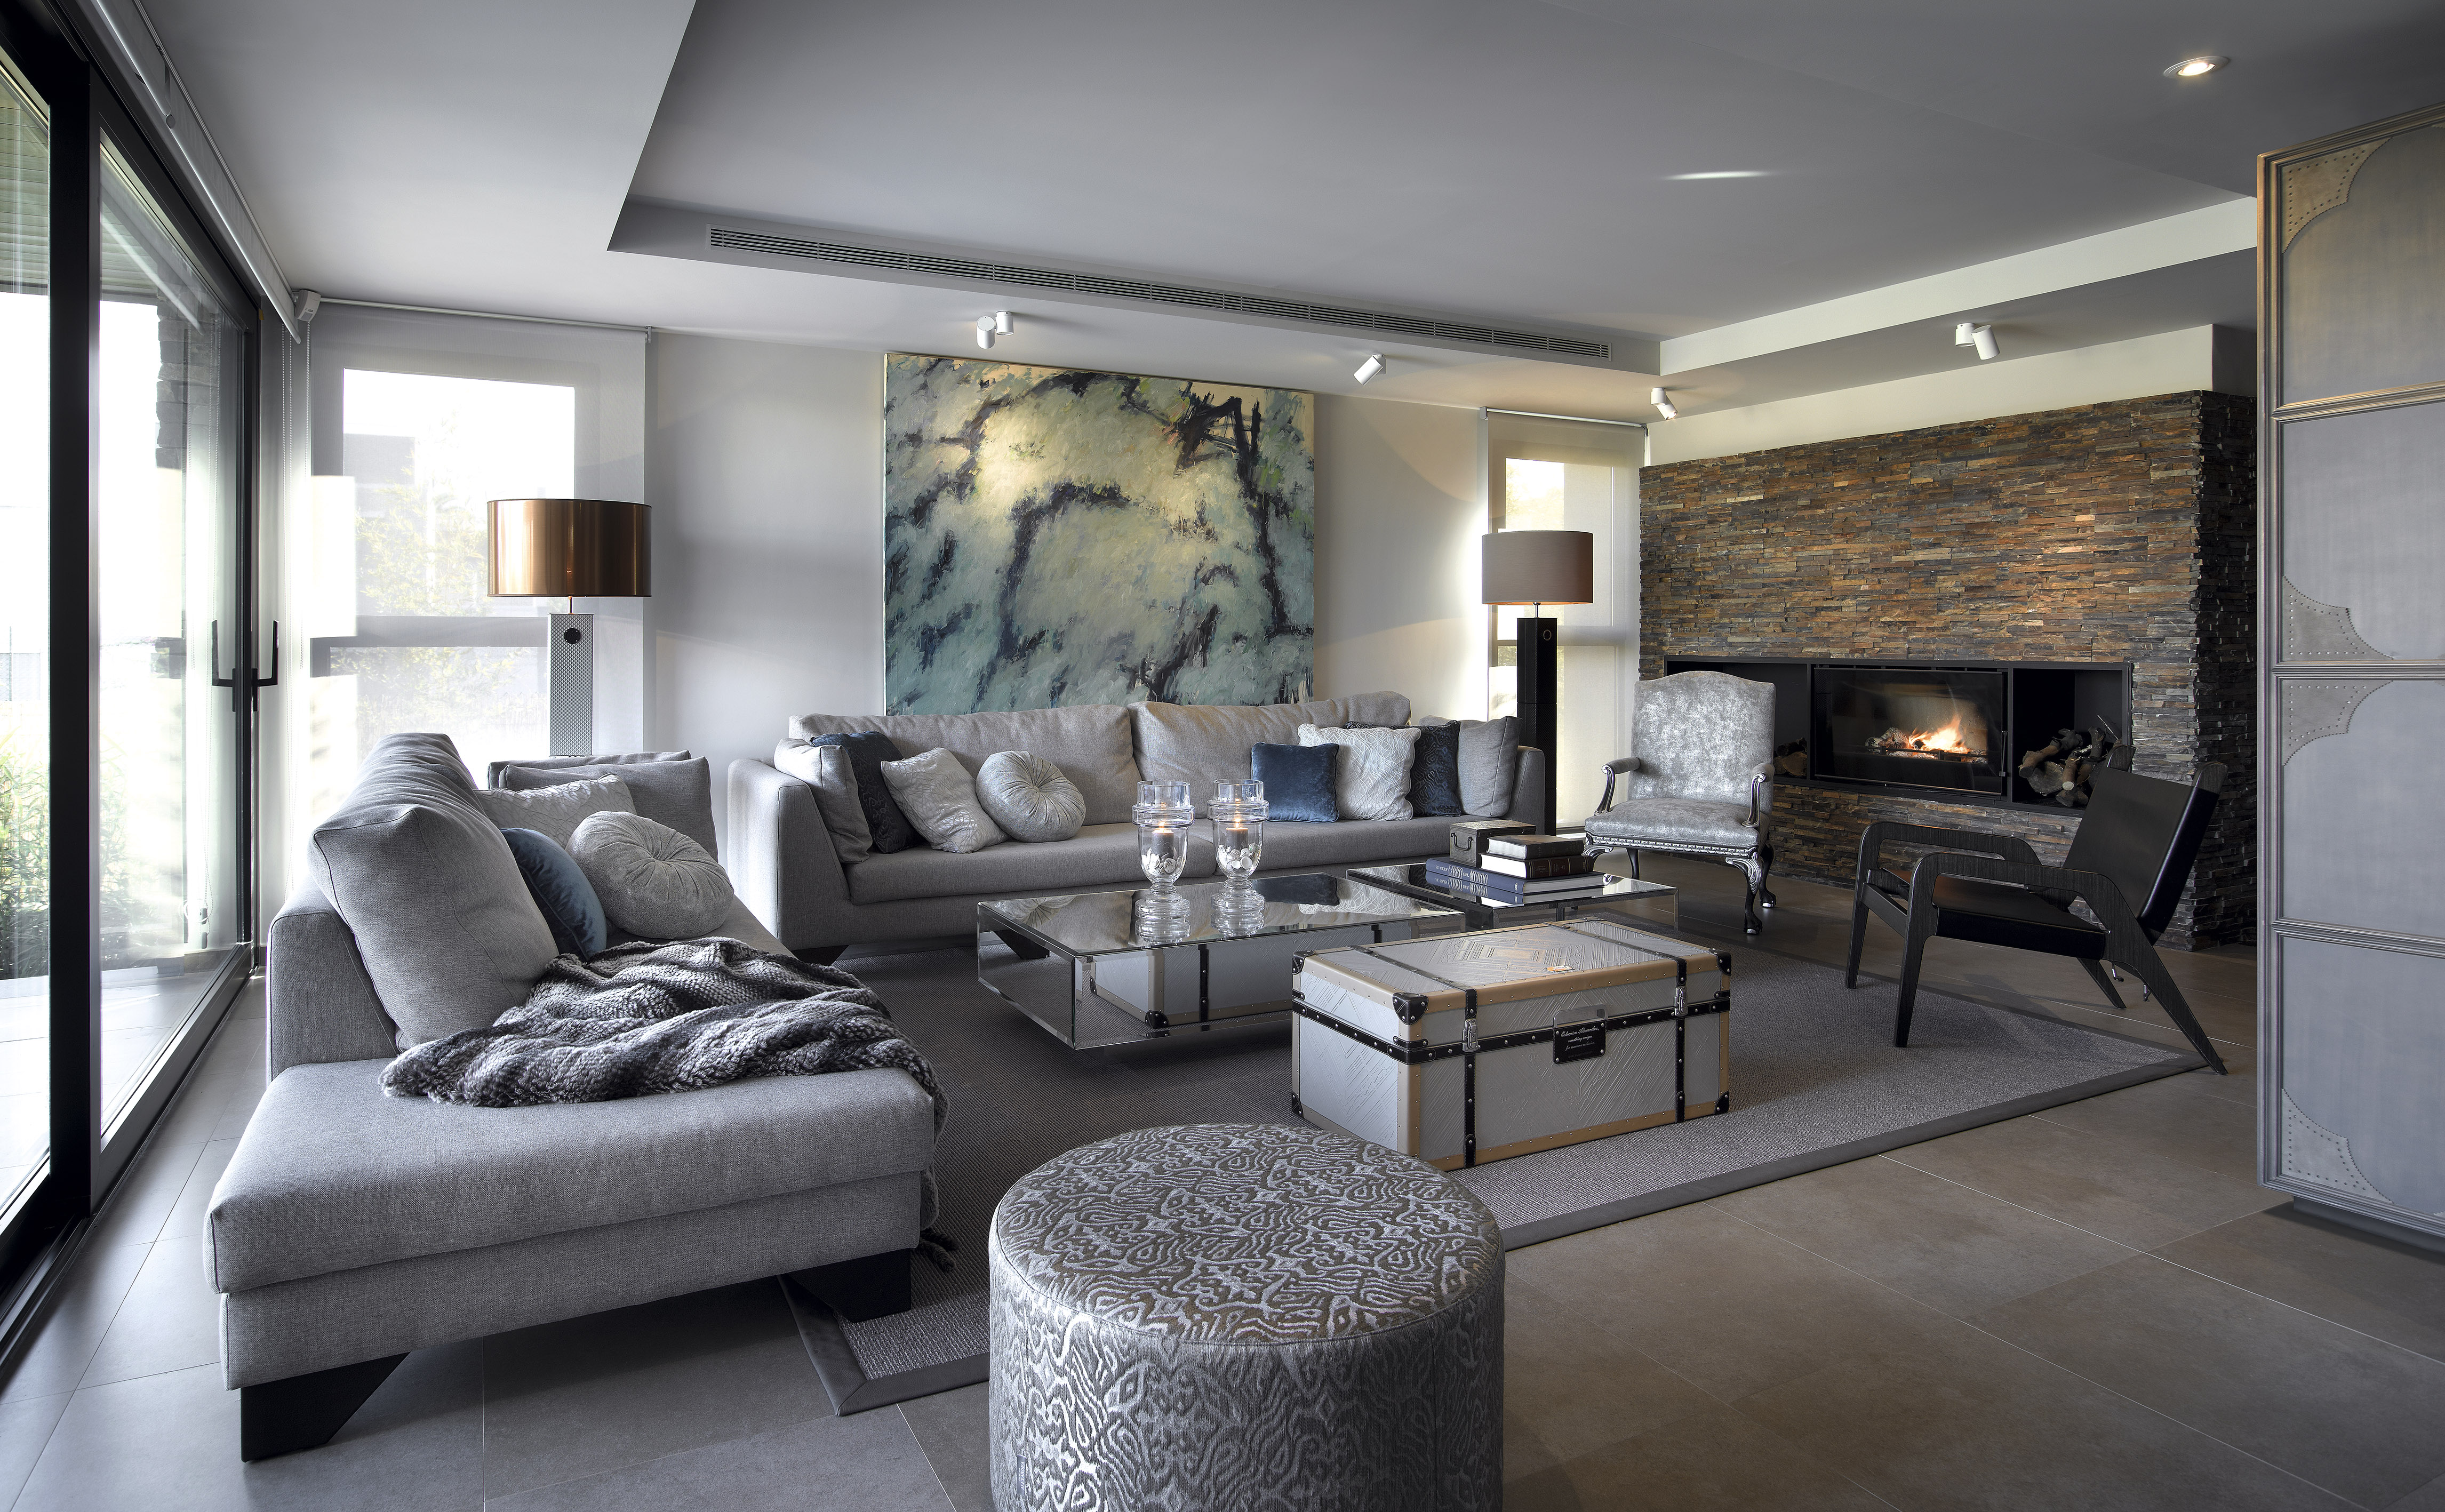 Luxury Living Room Furniture Sets, Modern Pictures For Living Room Uk